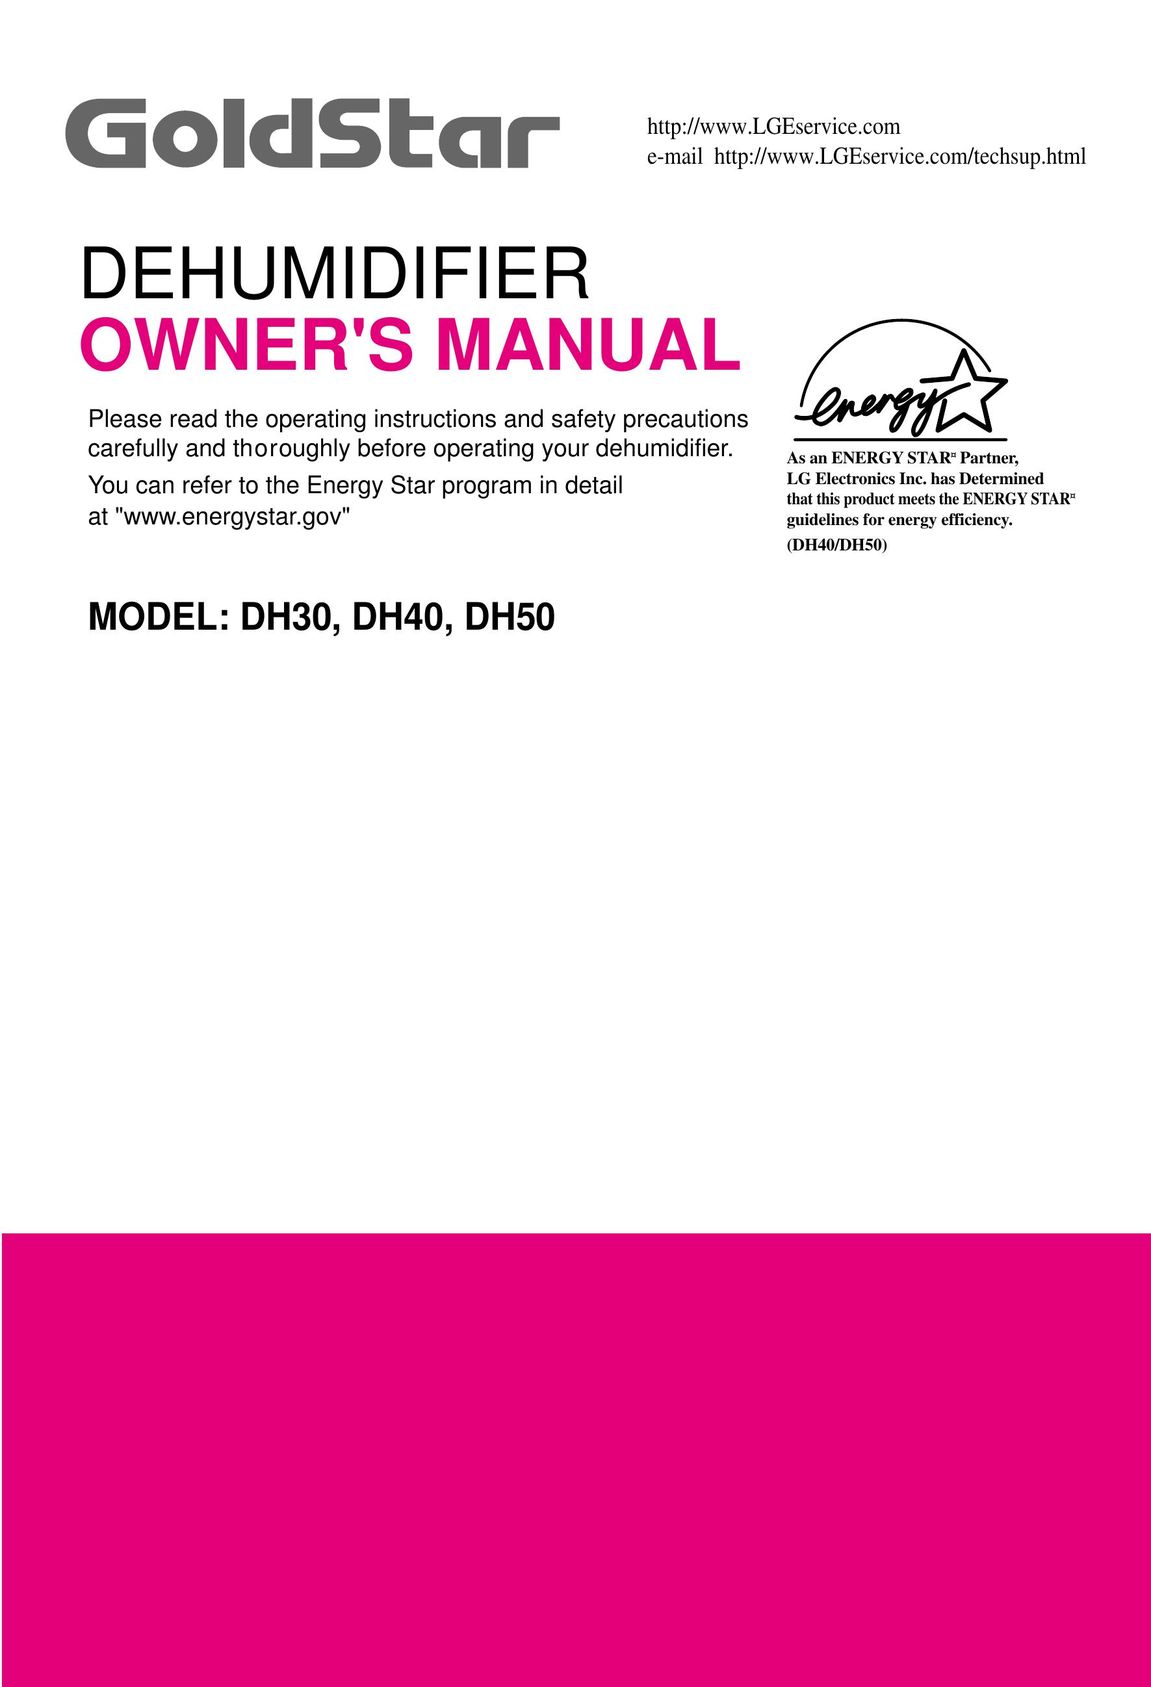 LG Electronics DH40 Dehumidifier User Manual